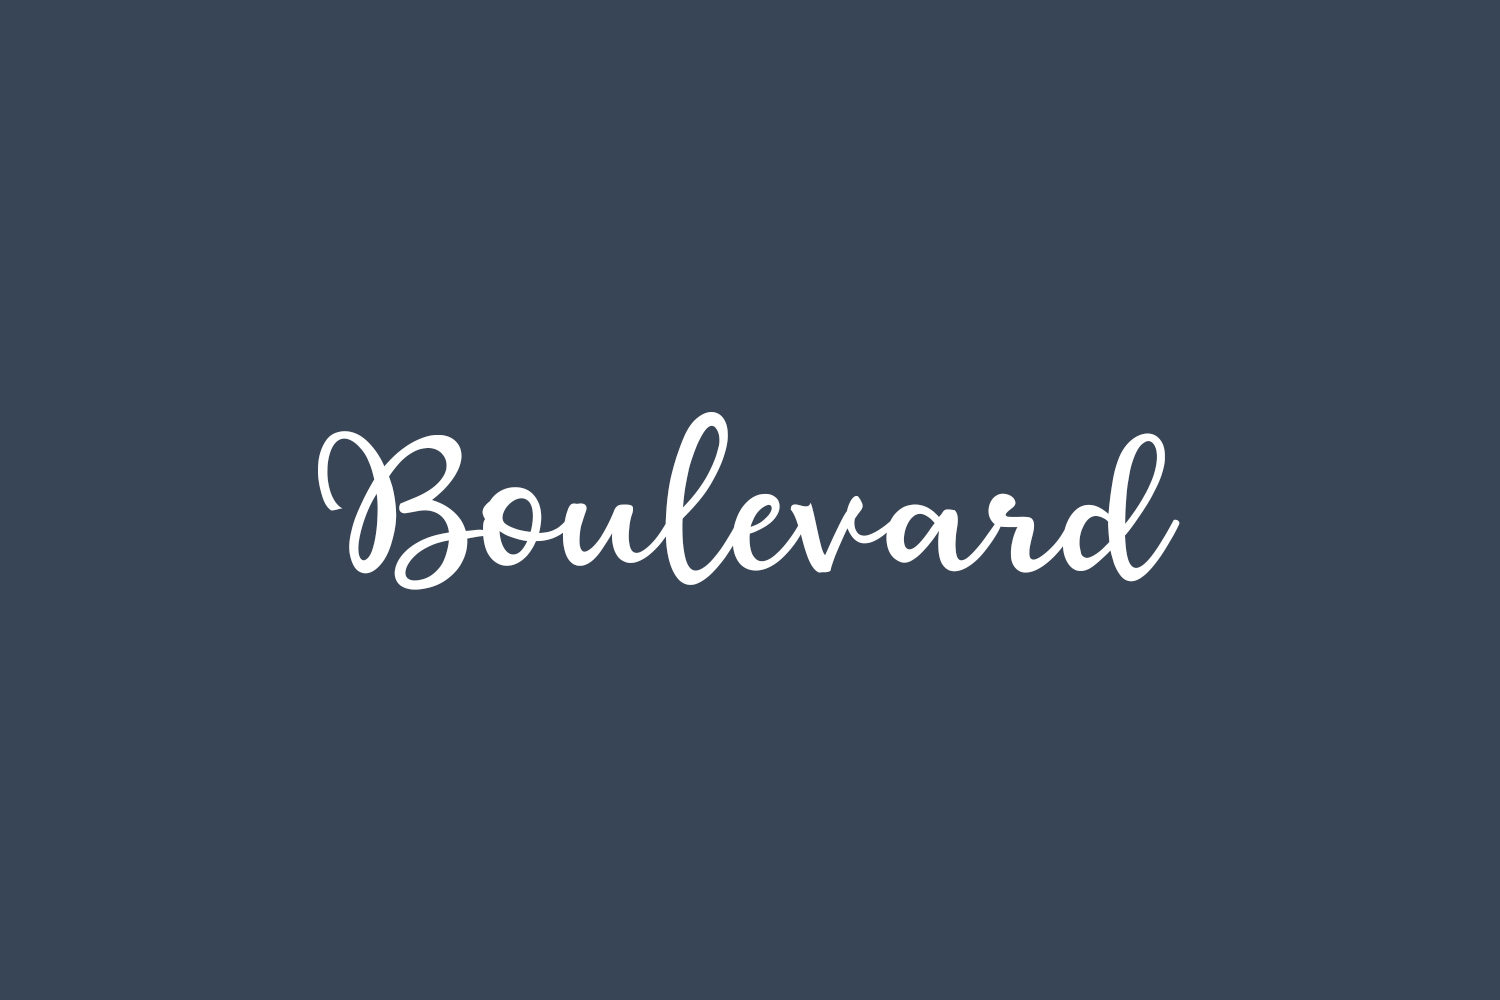 Boulevard Free Font